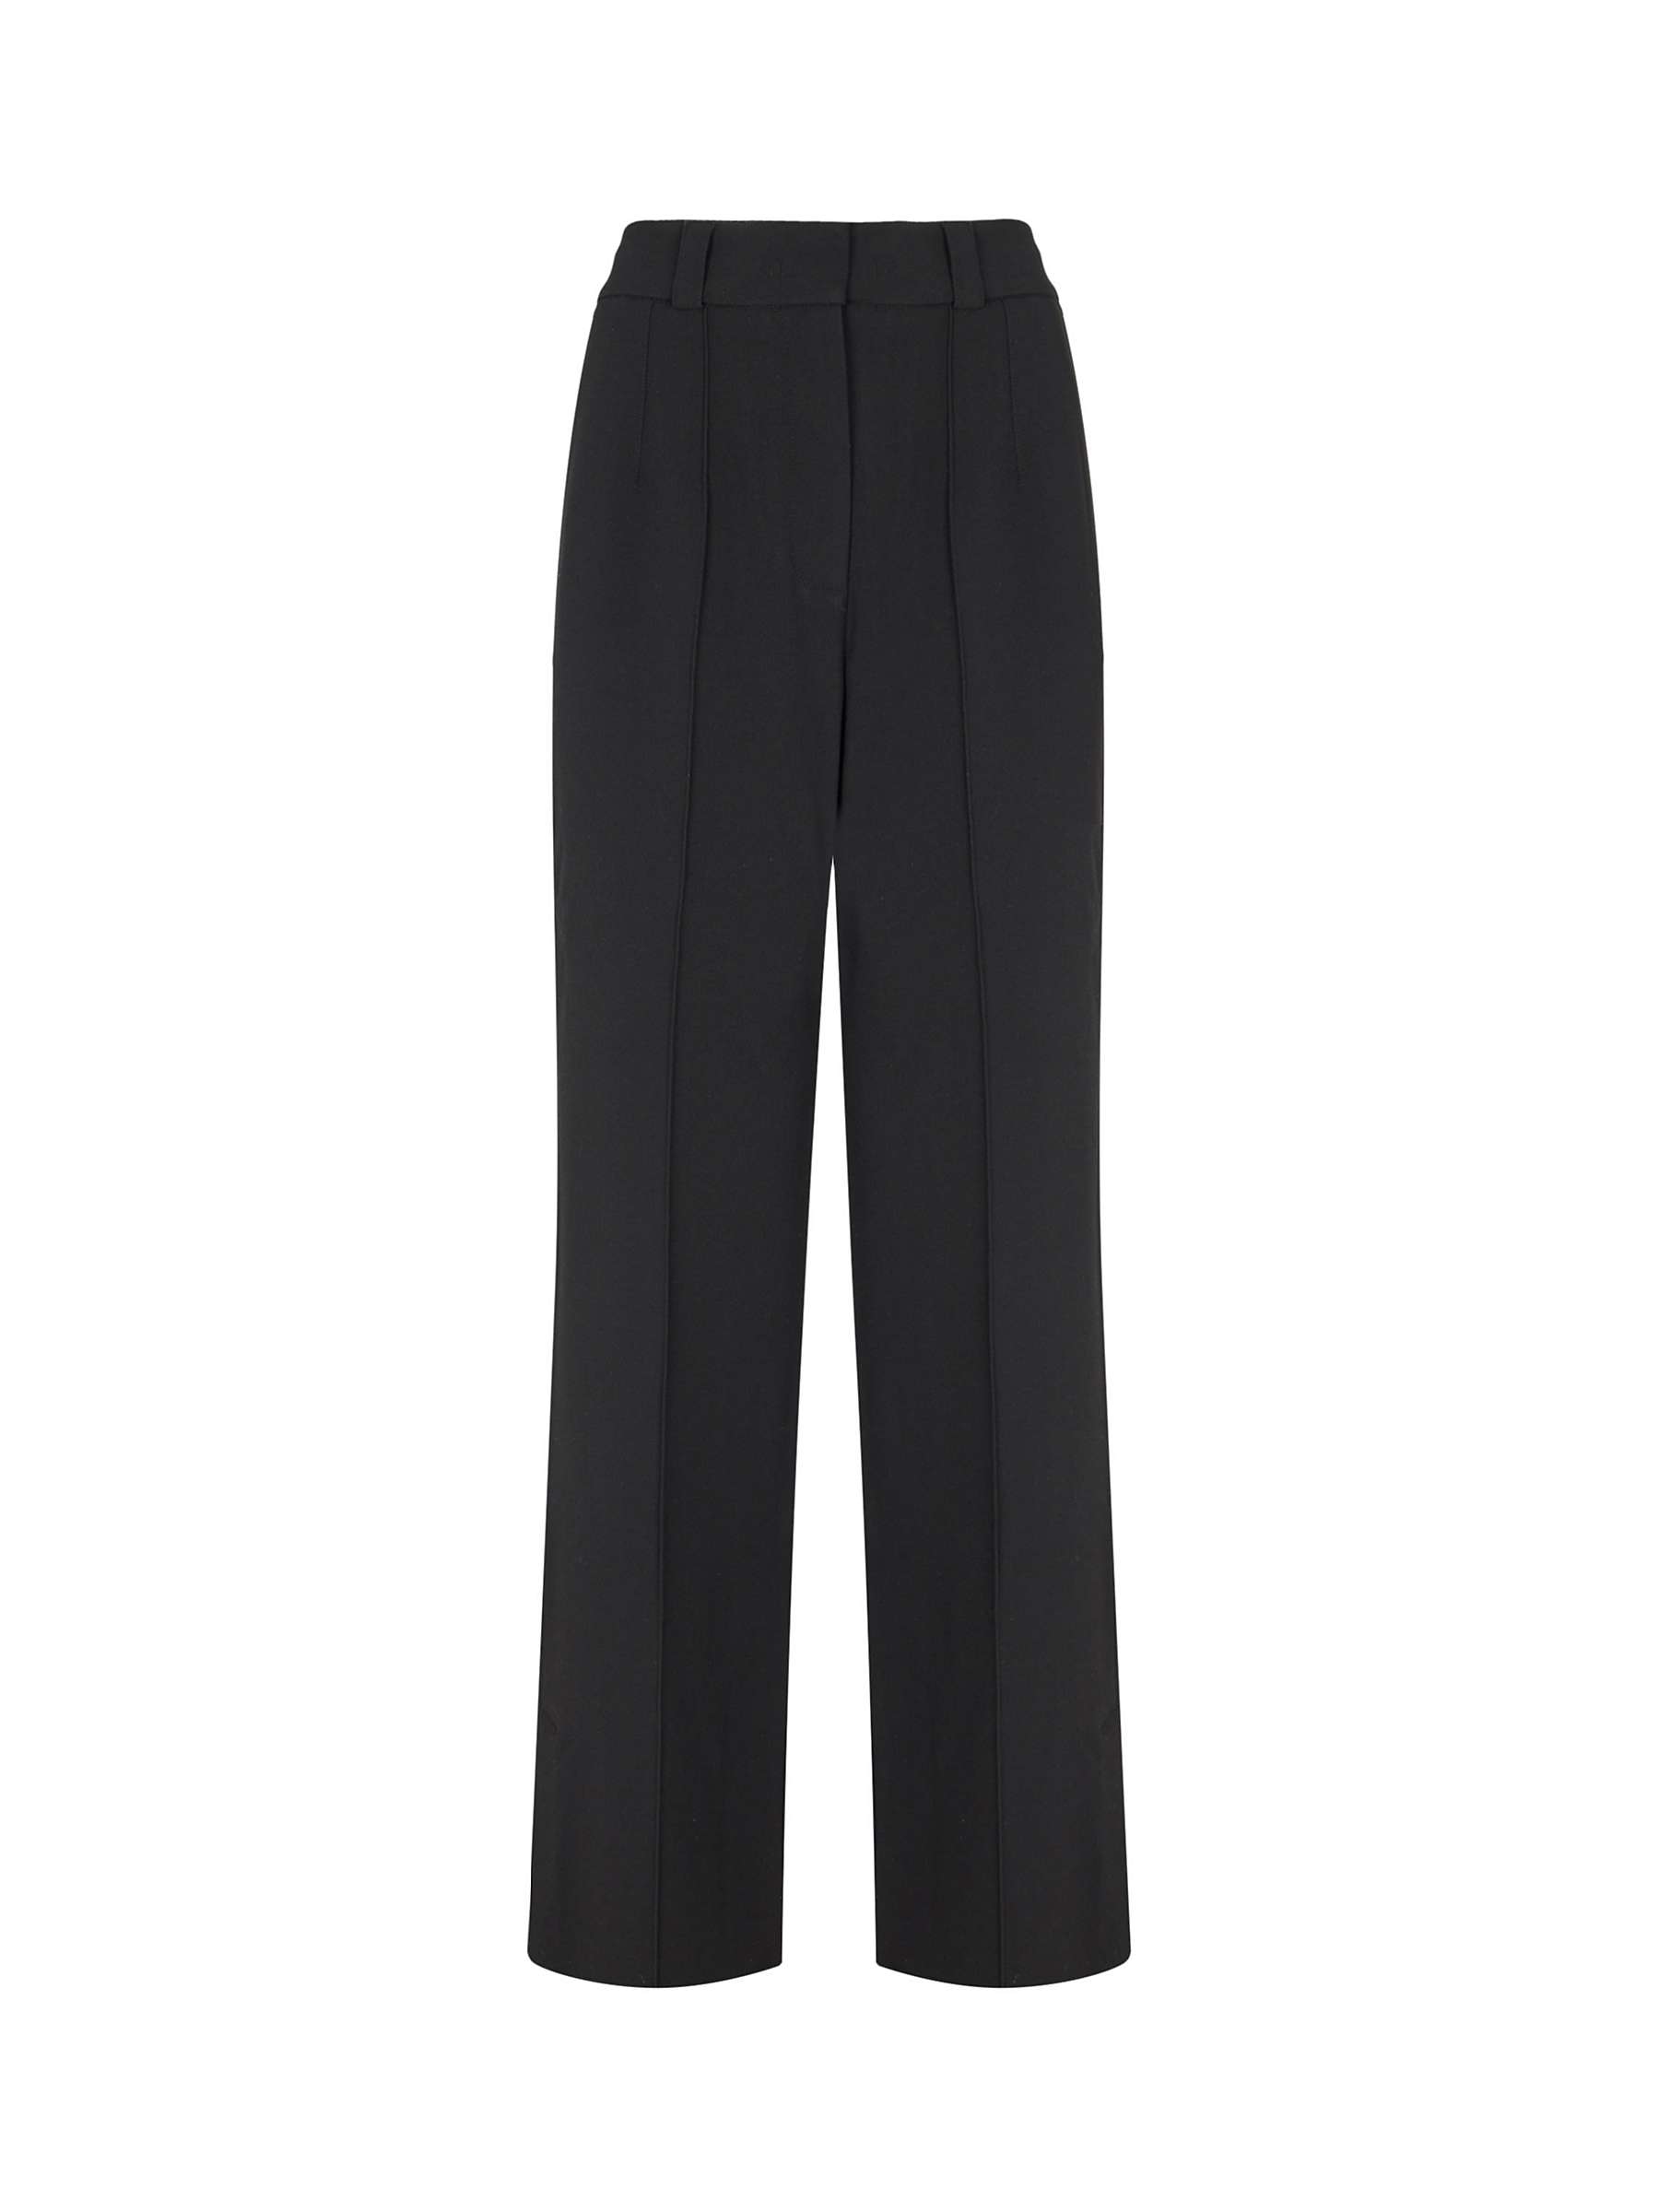 Buy Mint Velvet Straight Front Pleat Trousers, Black Online at johnlewis.com